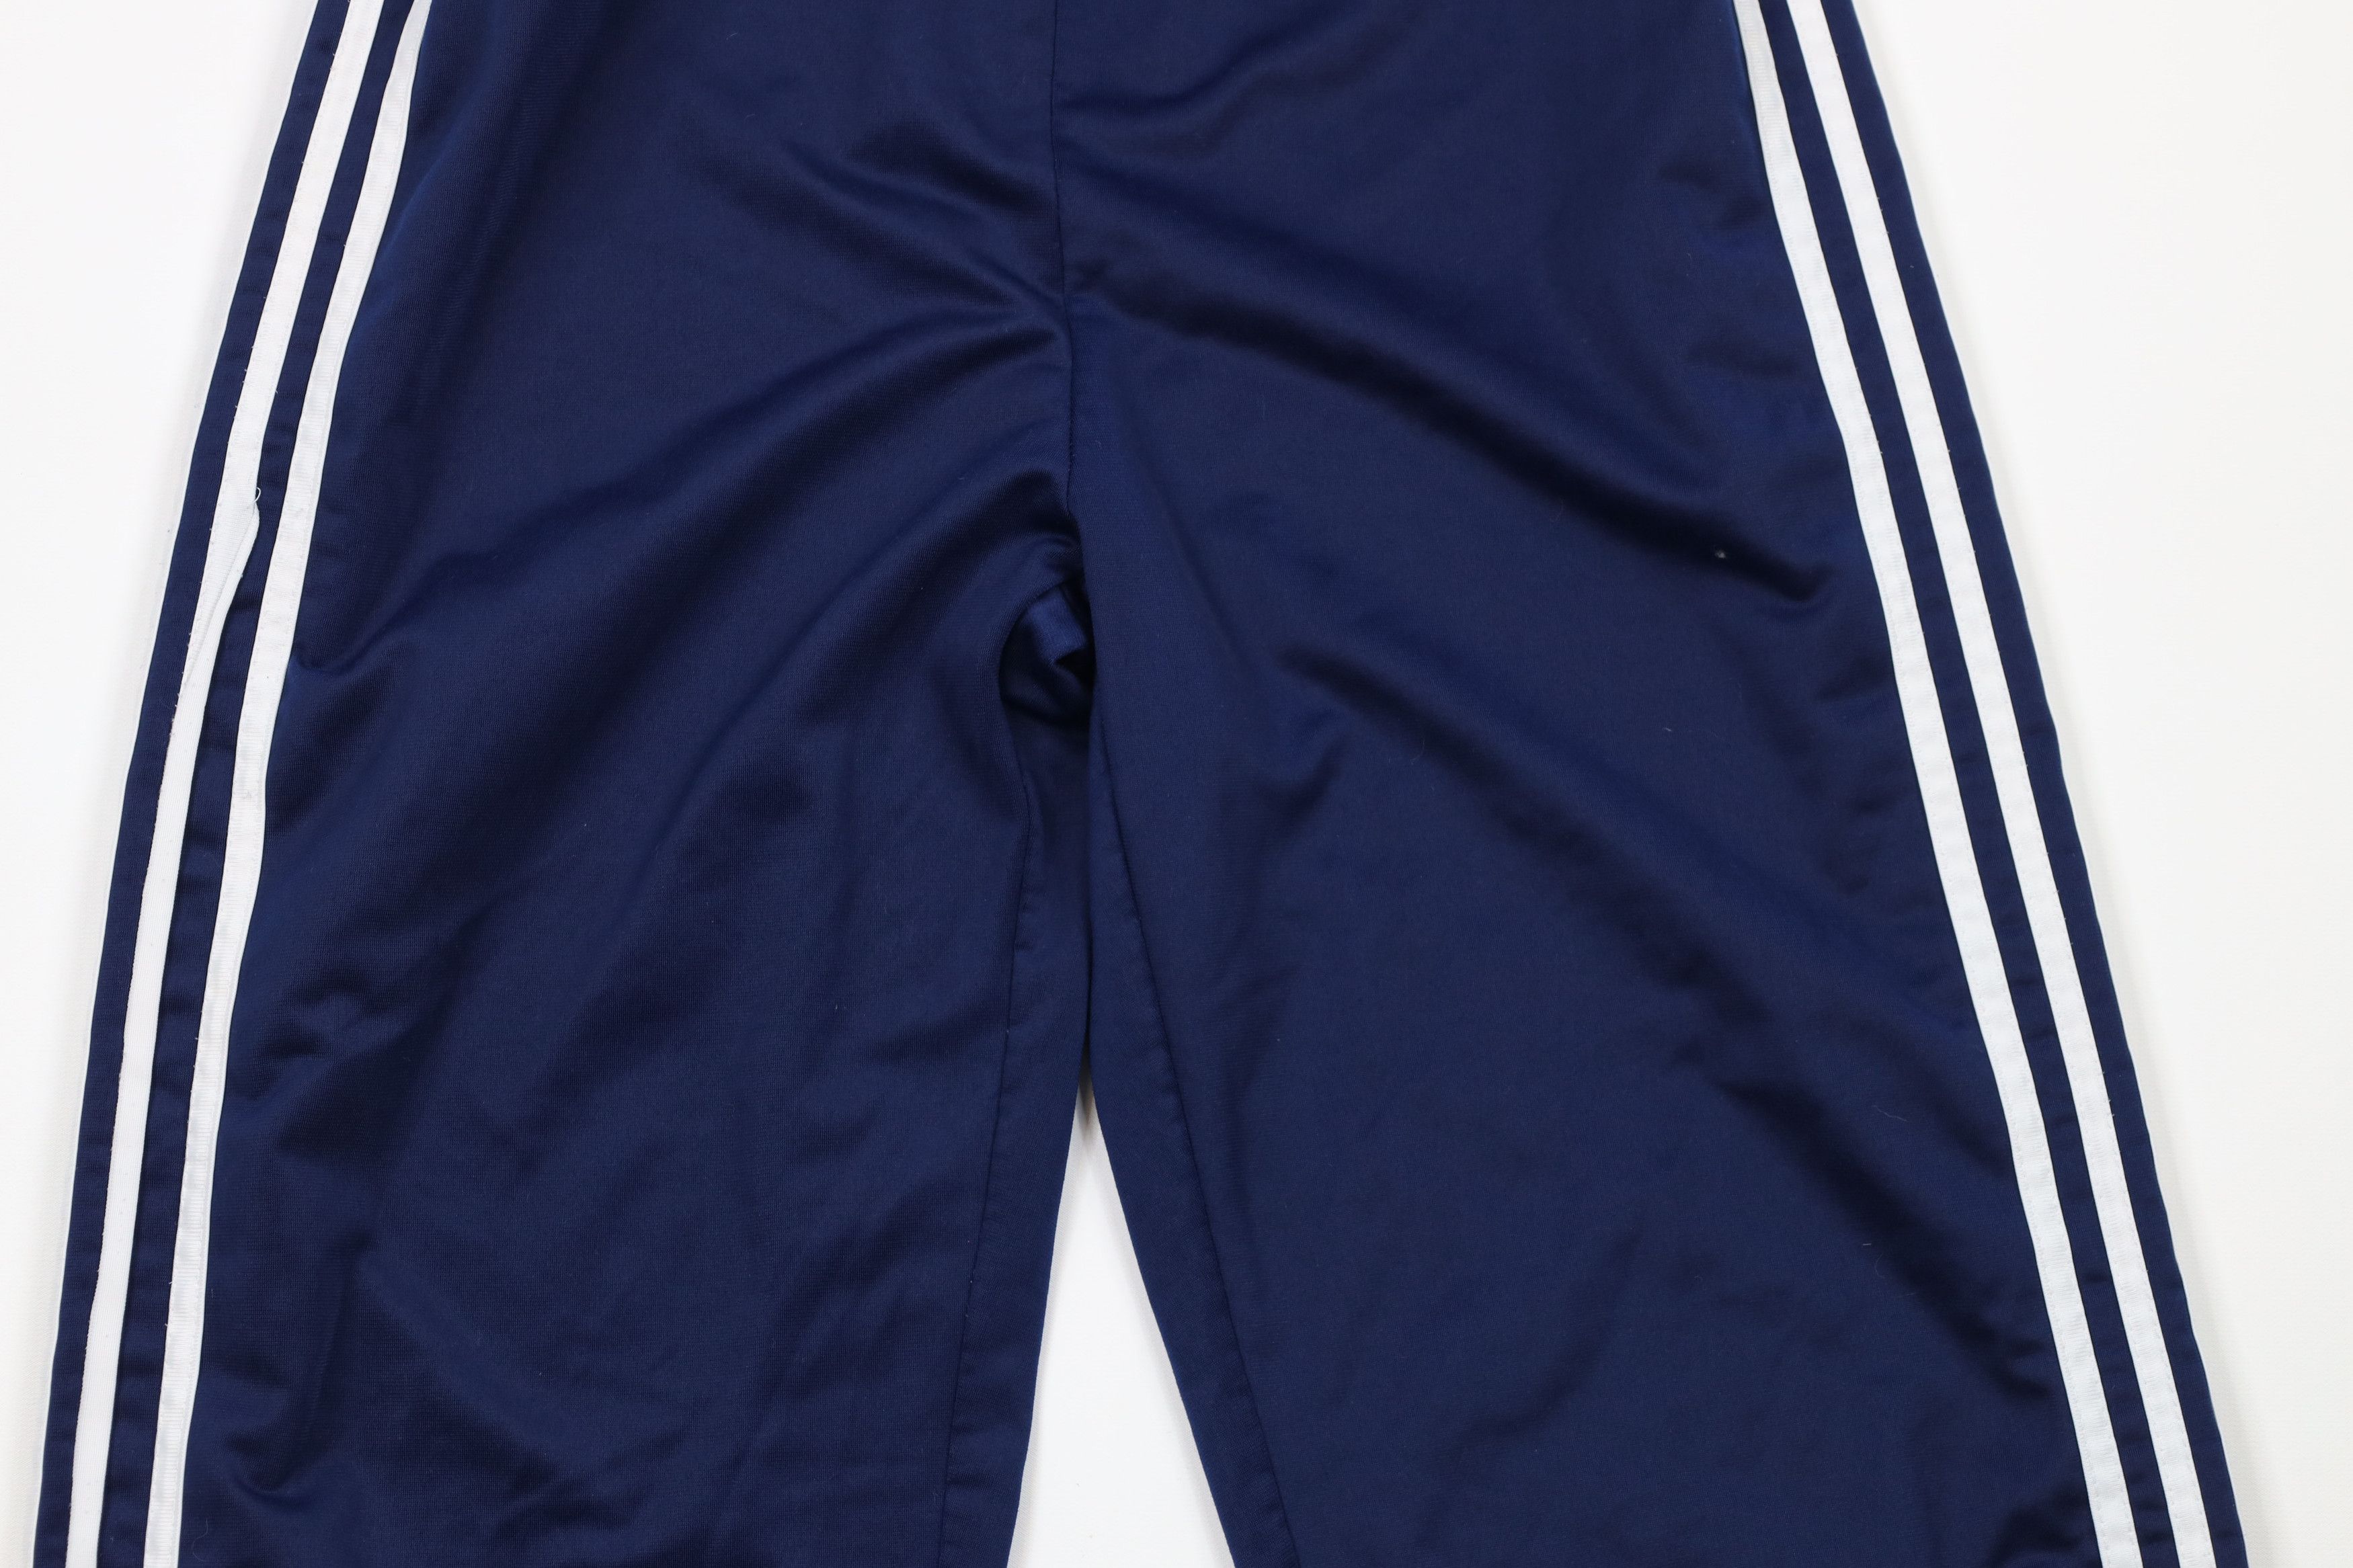 Adidas Vintage 90s Adidas Striped Tearaway Sweatpants Pants Blue Size US 34 / EU 50 - 3 Thumbnail